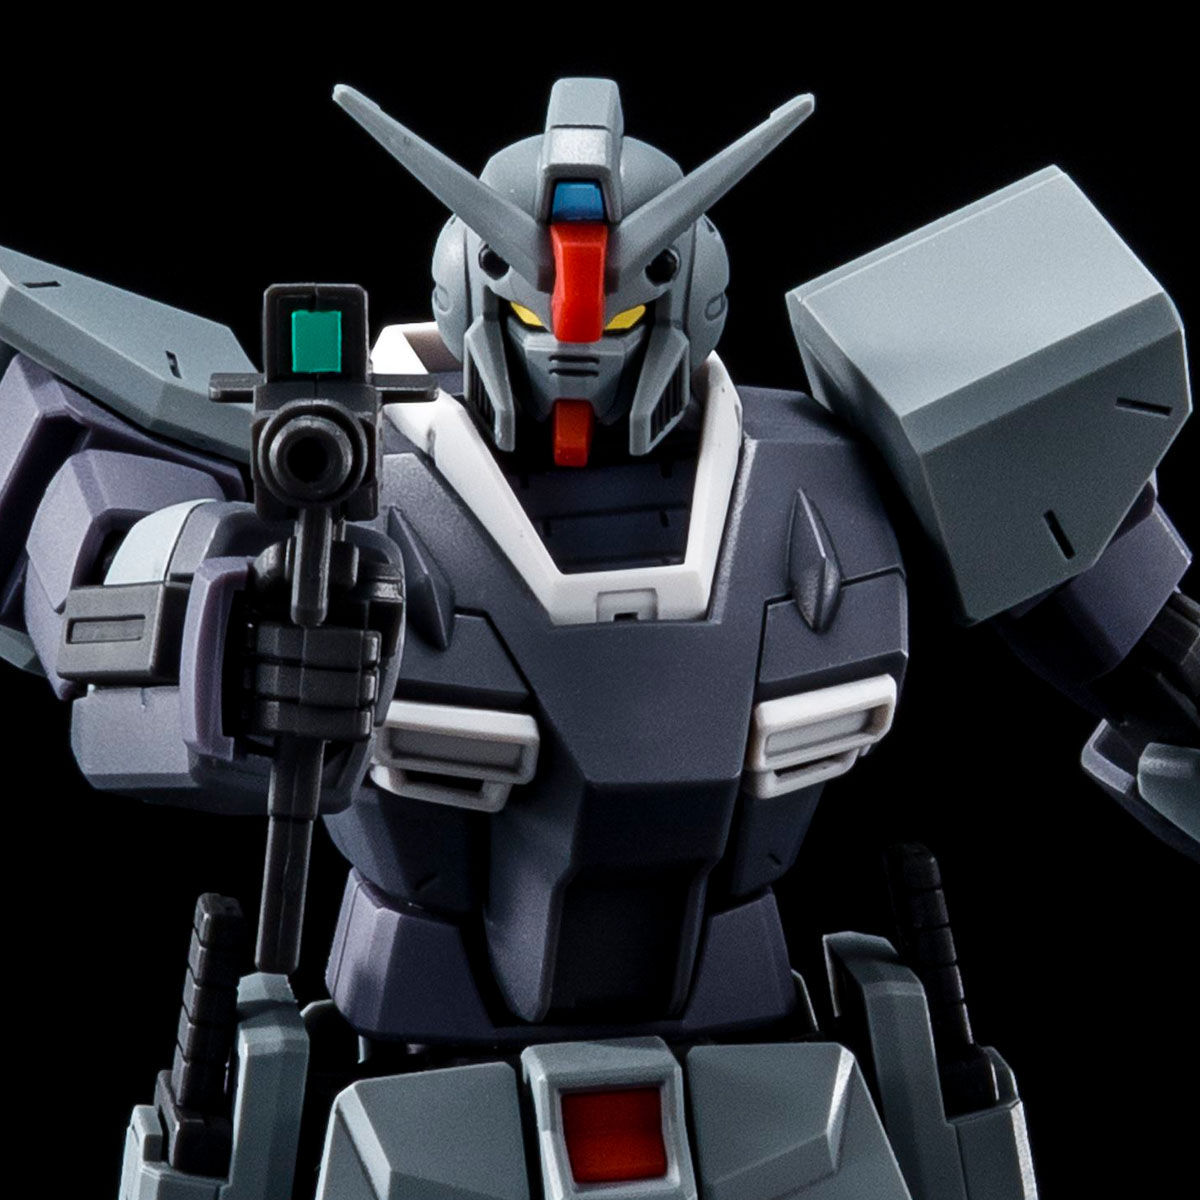 HGUC 1/144 RX-78XX Gundam Pixy